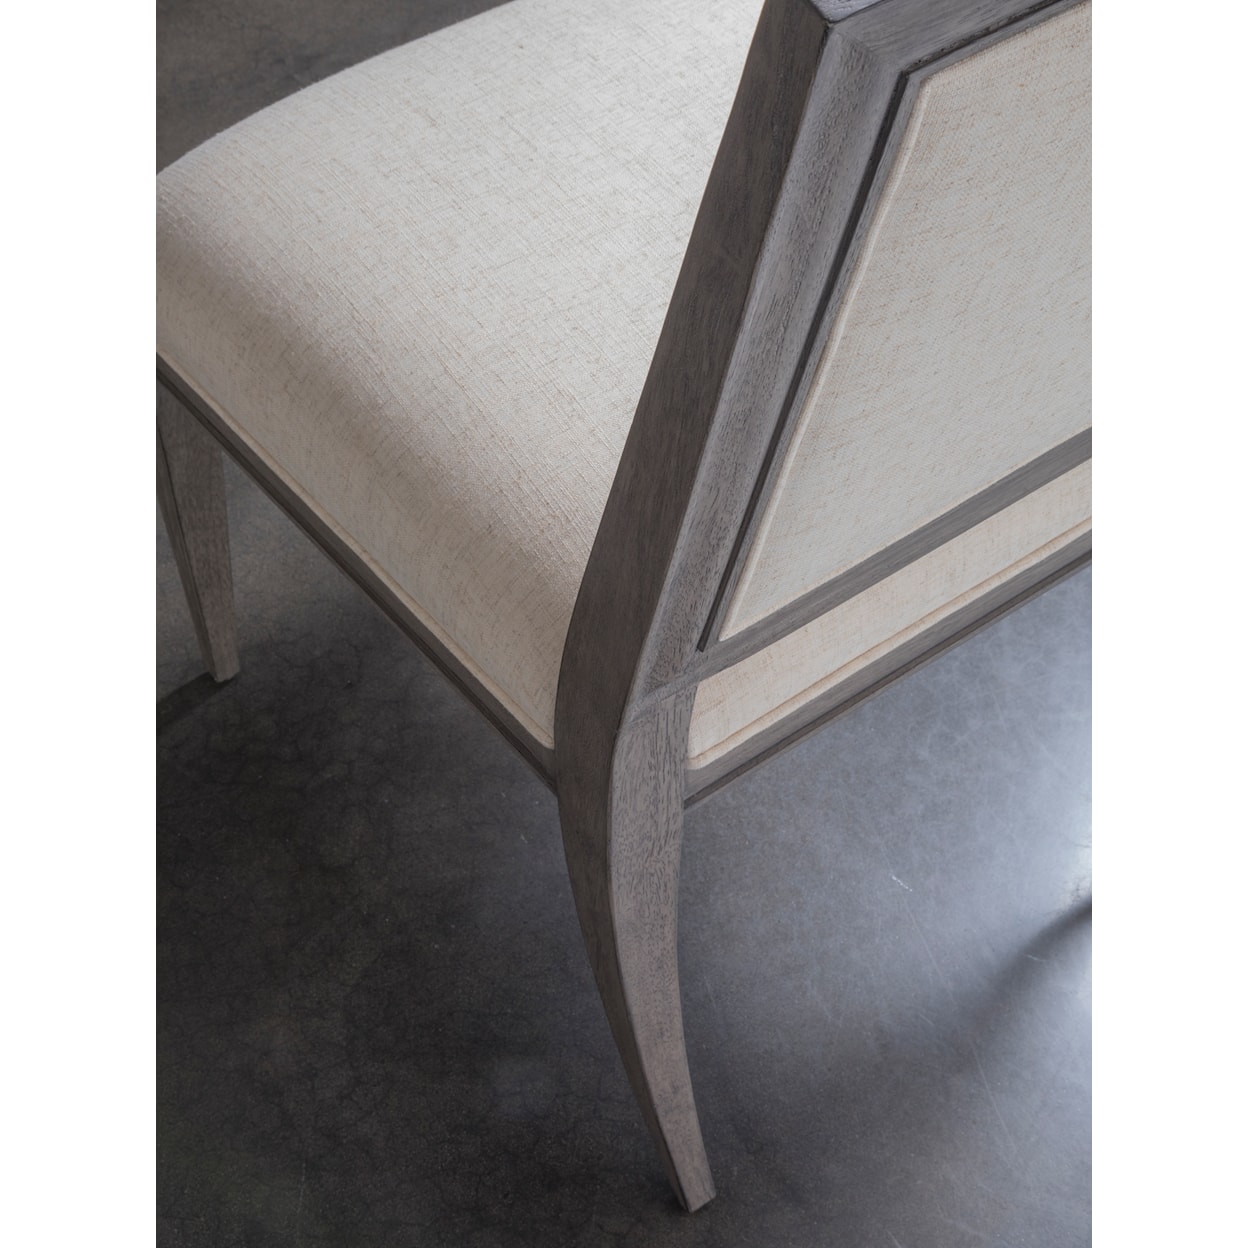 Artistica Belvedere Upholstered Side Chair